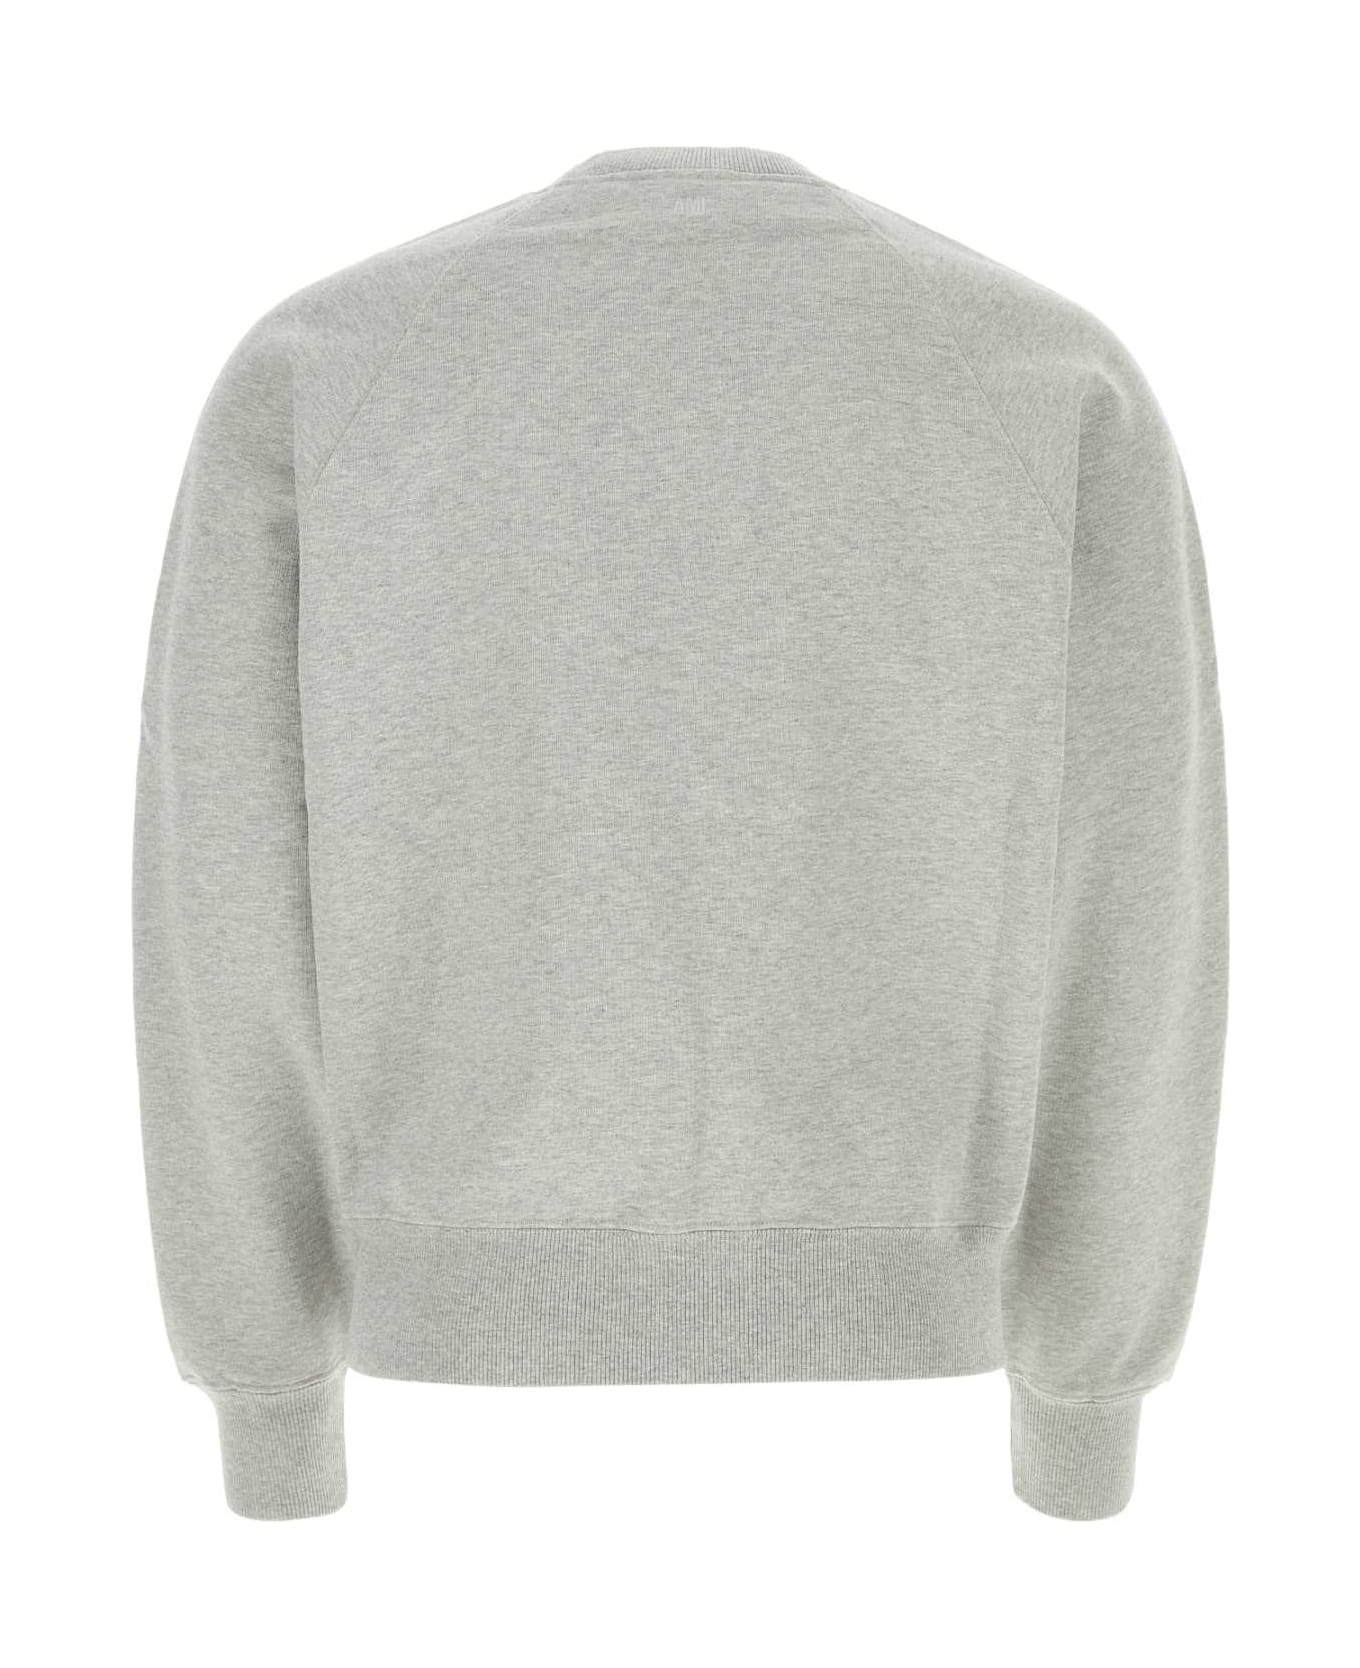 Ami Alexandre Mattiussi Light Grey Cotton Sweatshirt - HEATHERASHGREY